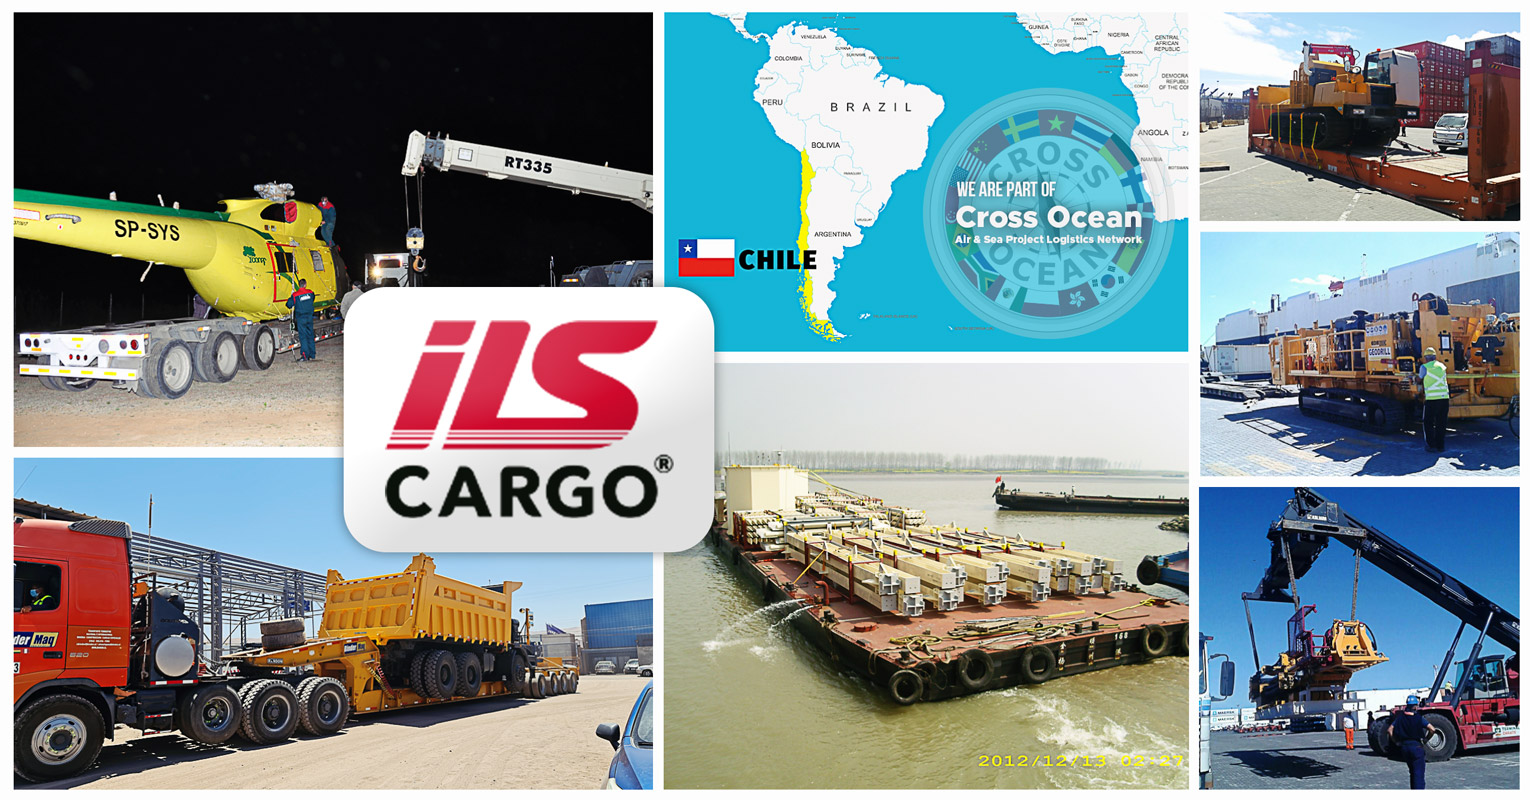 New member representing Chile – ILS Cargo